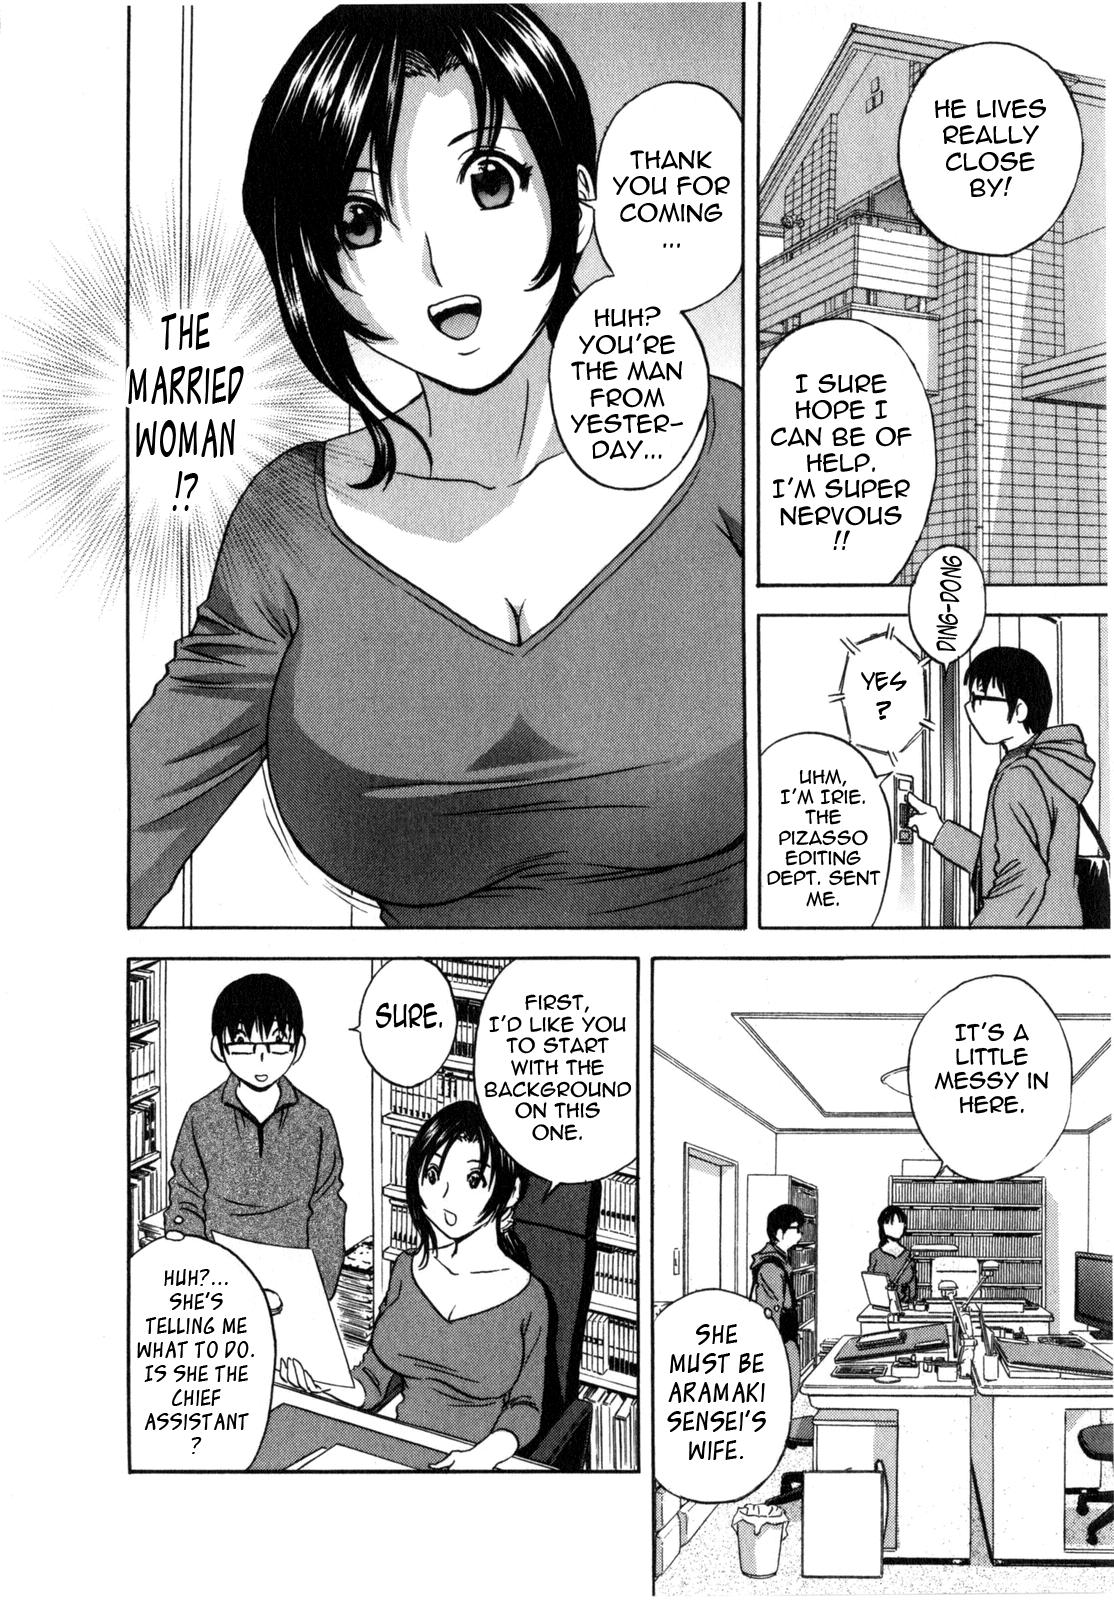 [Hidemaru] Life with Married Women Just Like a Manga 1 - Ch. 1-9 [English] {Tadanohito} 12